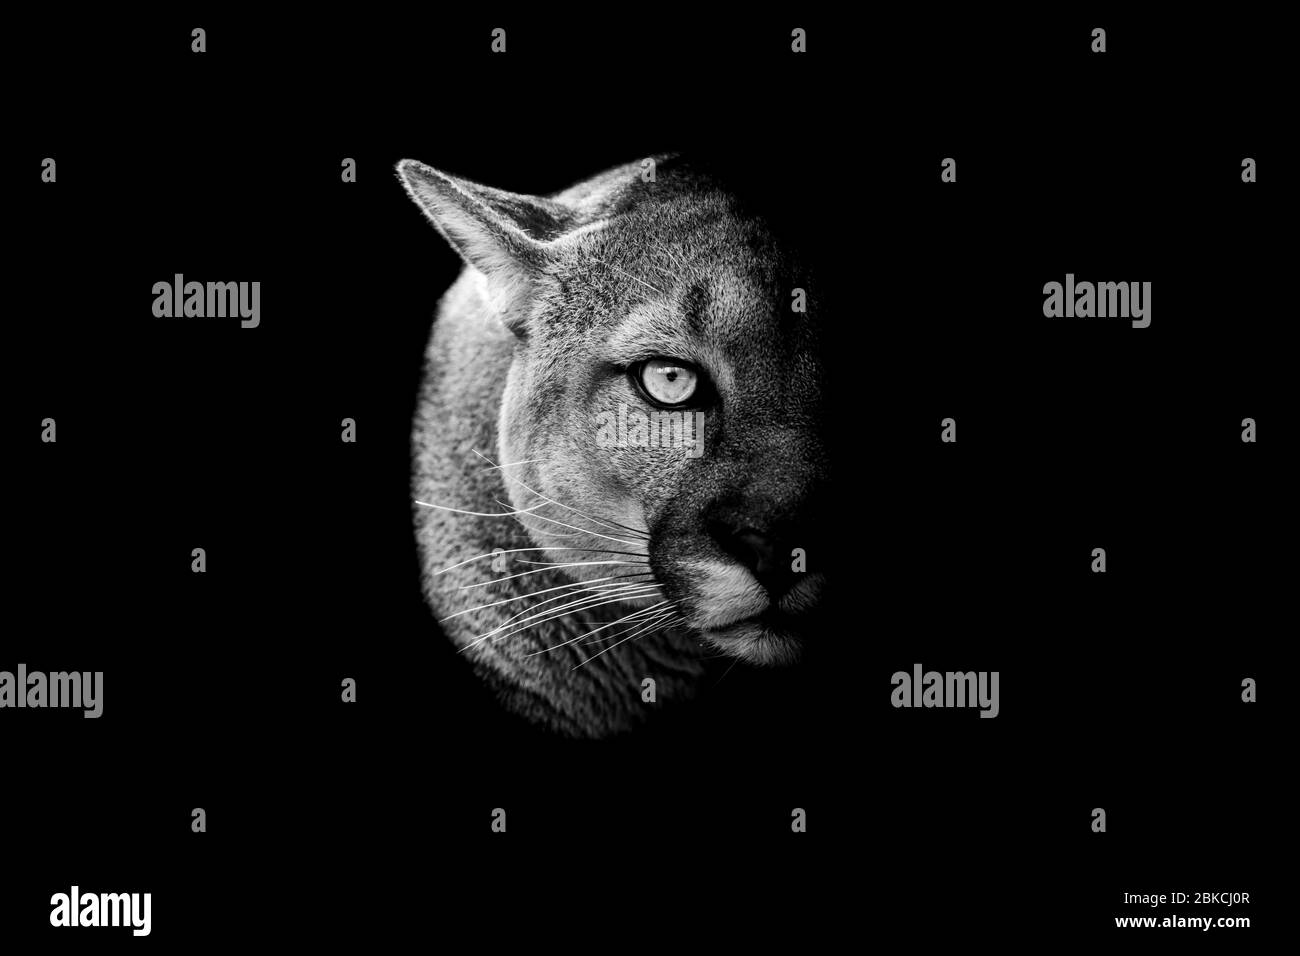 Puma eye Black and White Stock Photos & Images - Alamy